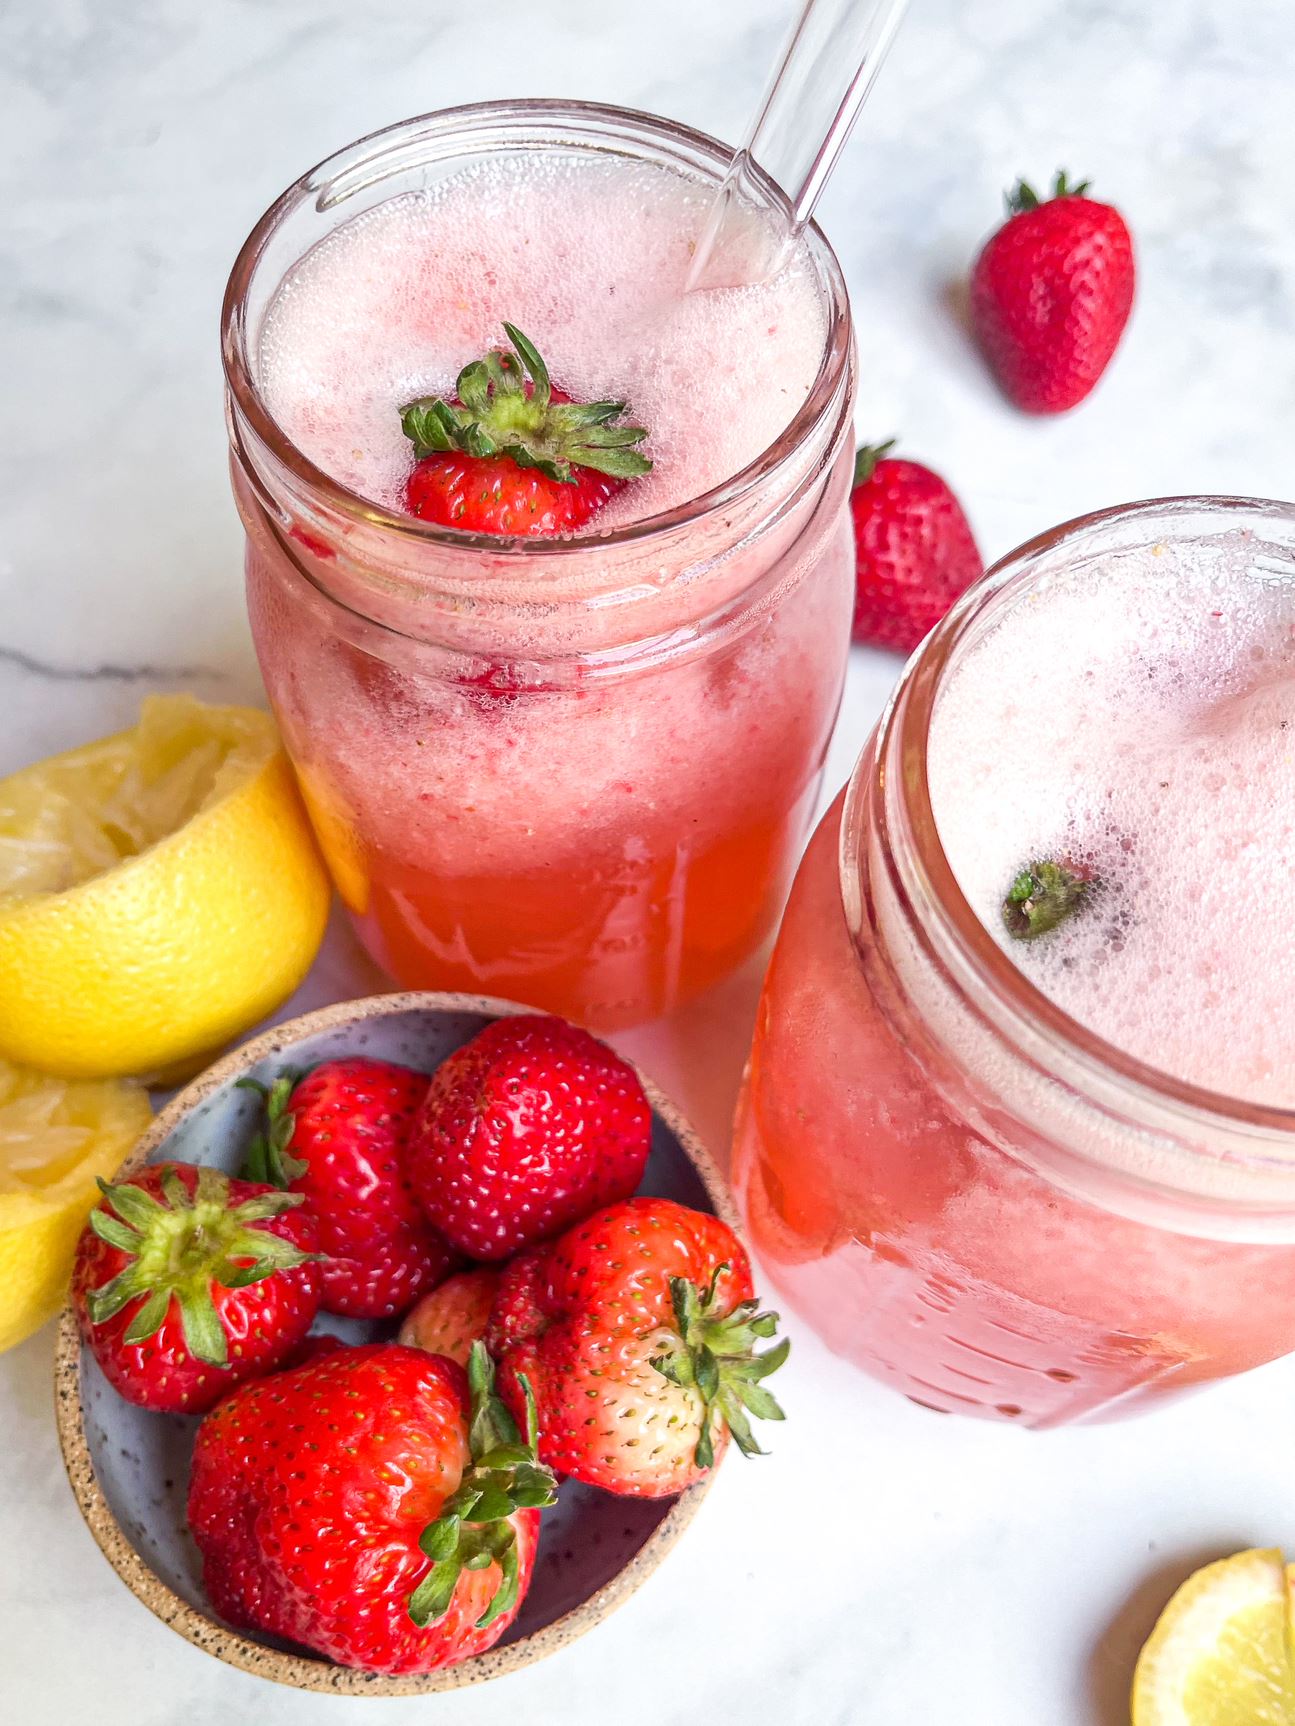 Finished strawberry-lemonade electrolyte drink in 2 glasses